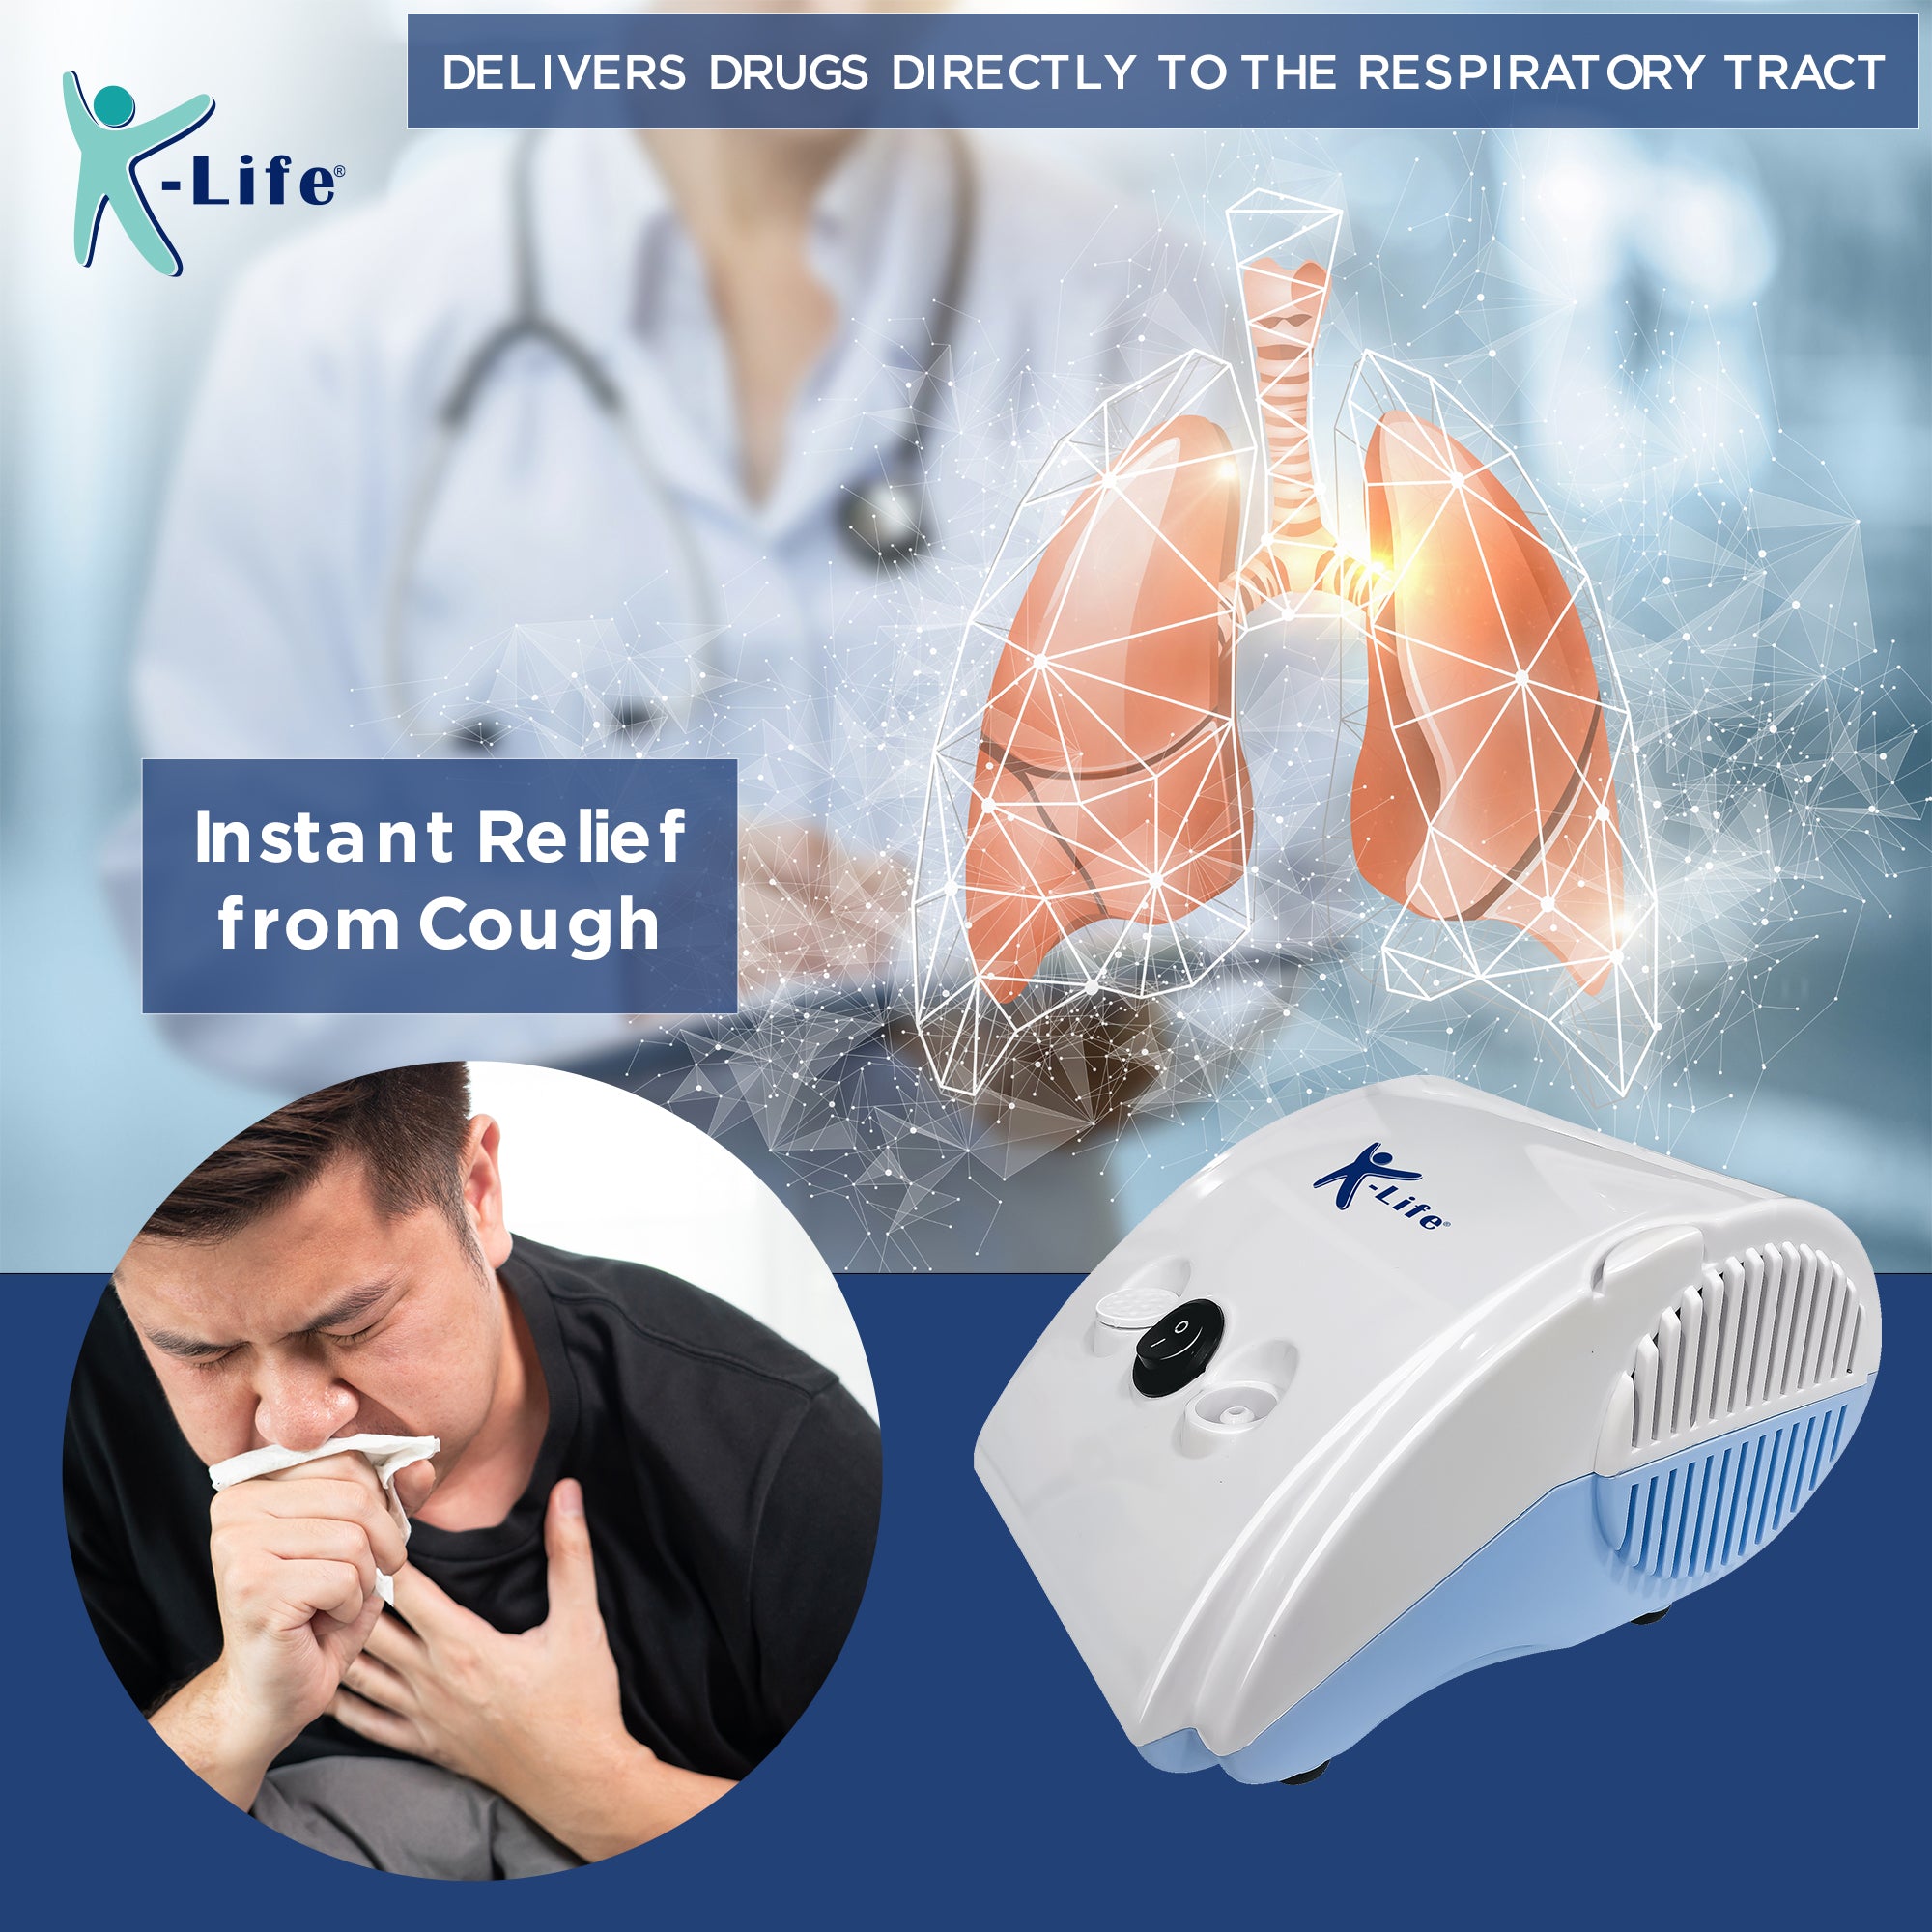 K-life 104-B Steam Respiratory Machine Kit For Baby Adults kids Asthma Inhaler Patients Nebulizer  (White)